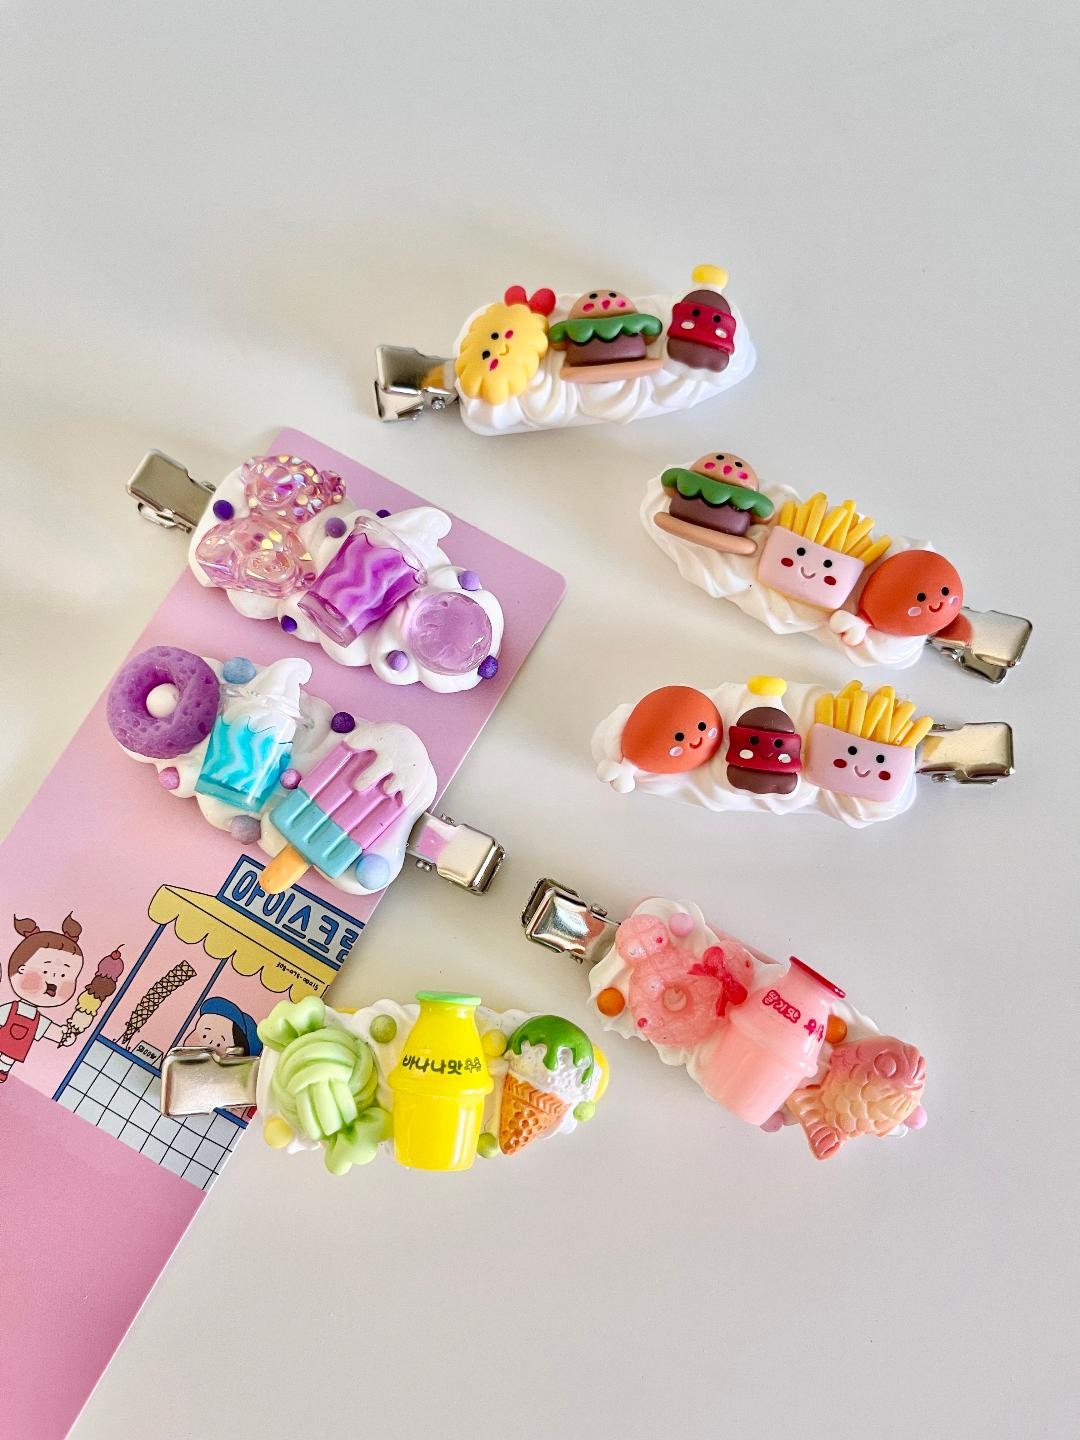 PINK Decoden Cream Glue Toploader Kit, Decoden Kits for Beginners